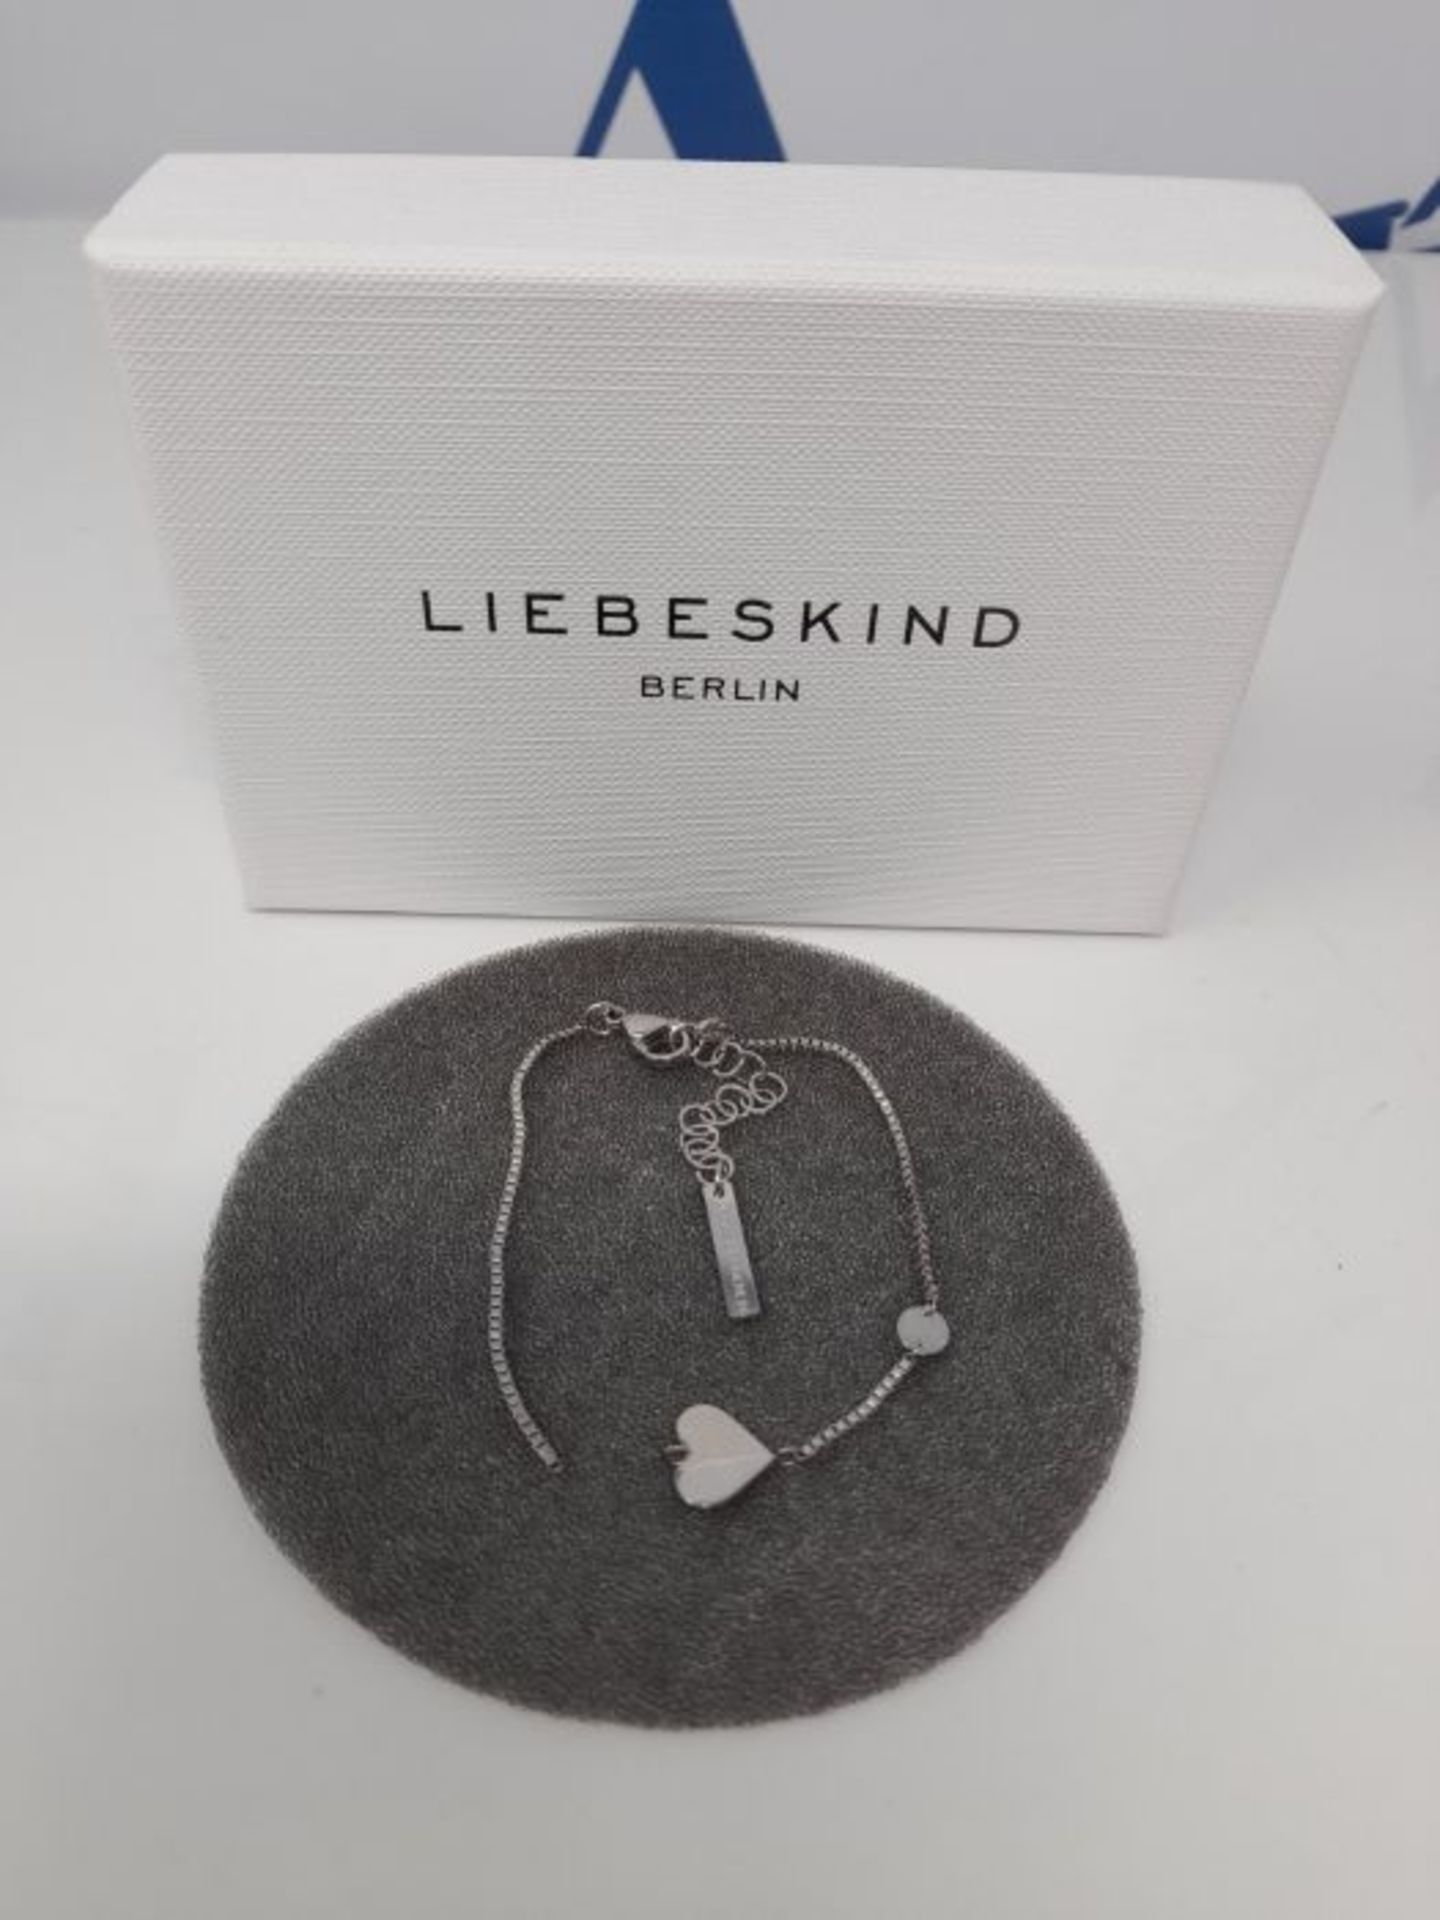 Liebeskind Berlin Bracelet, 20 cm, Stainless Steel, No gemstone., - Image 2 of 6